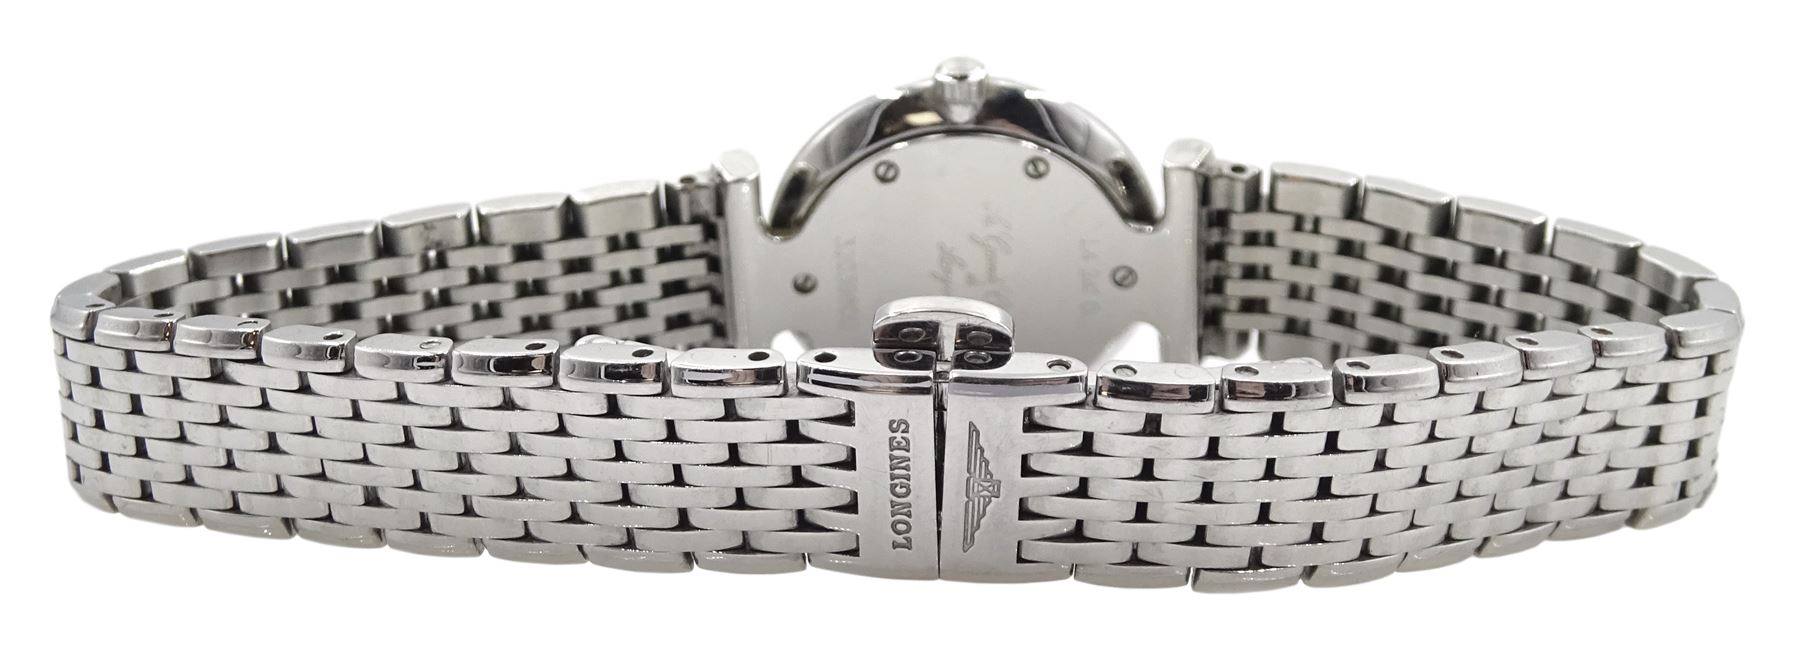 Longines La Grand Classique ladies stainless steel quartz wristwatch with diamond set bezel - Image 4 of 6